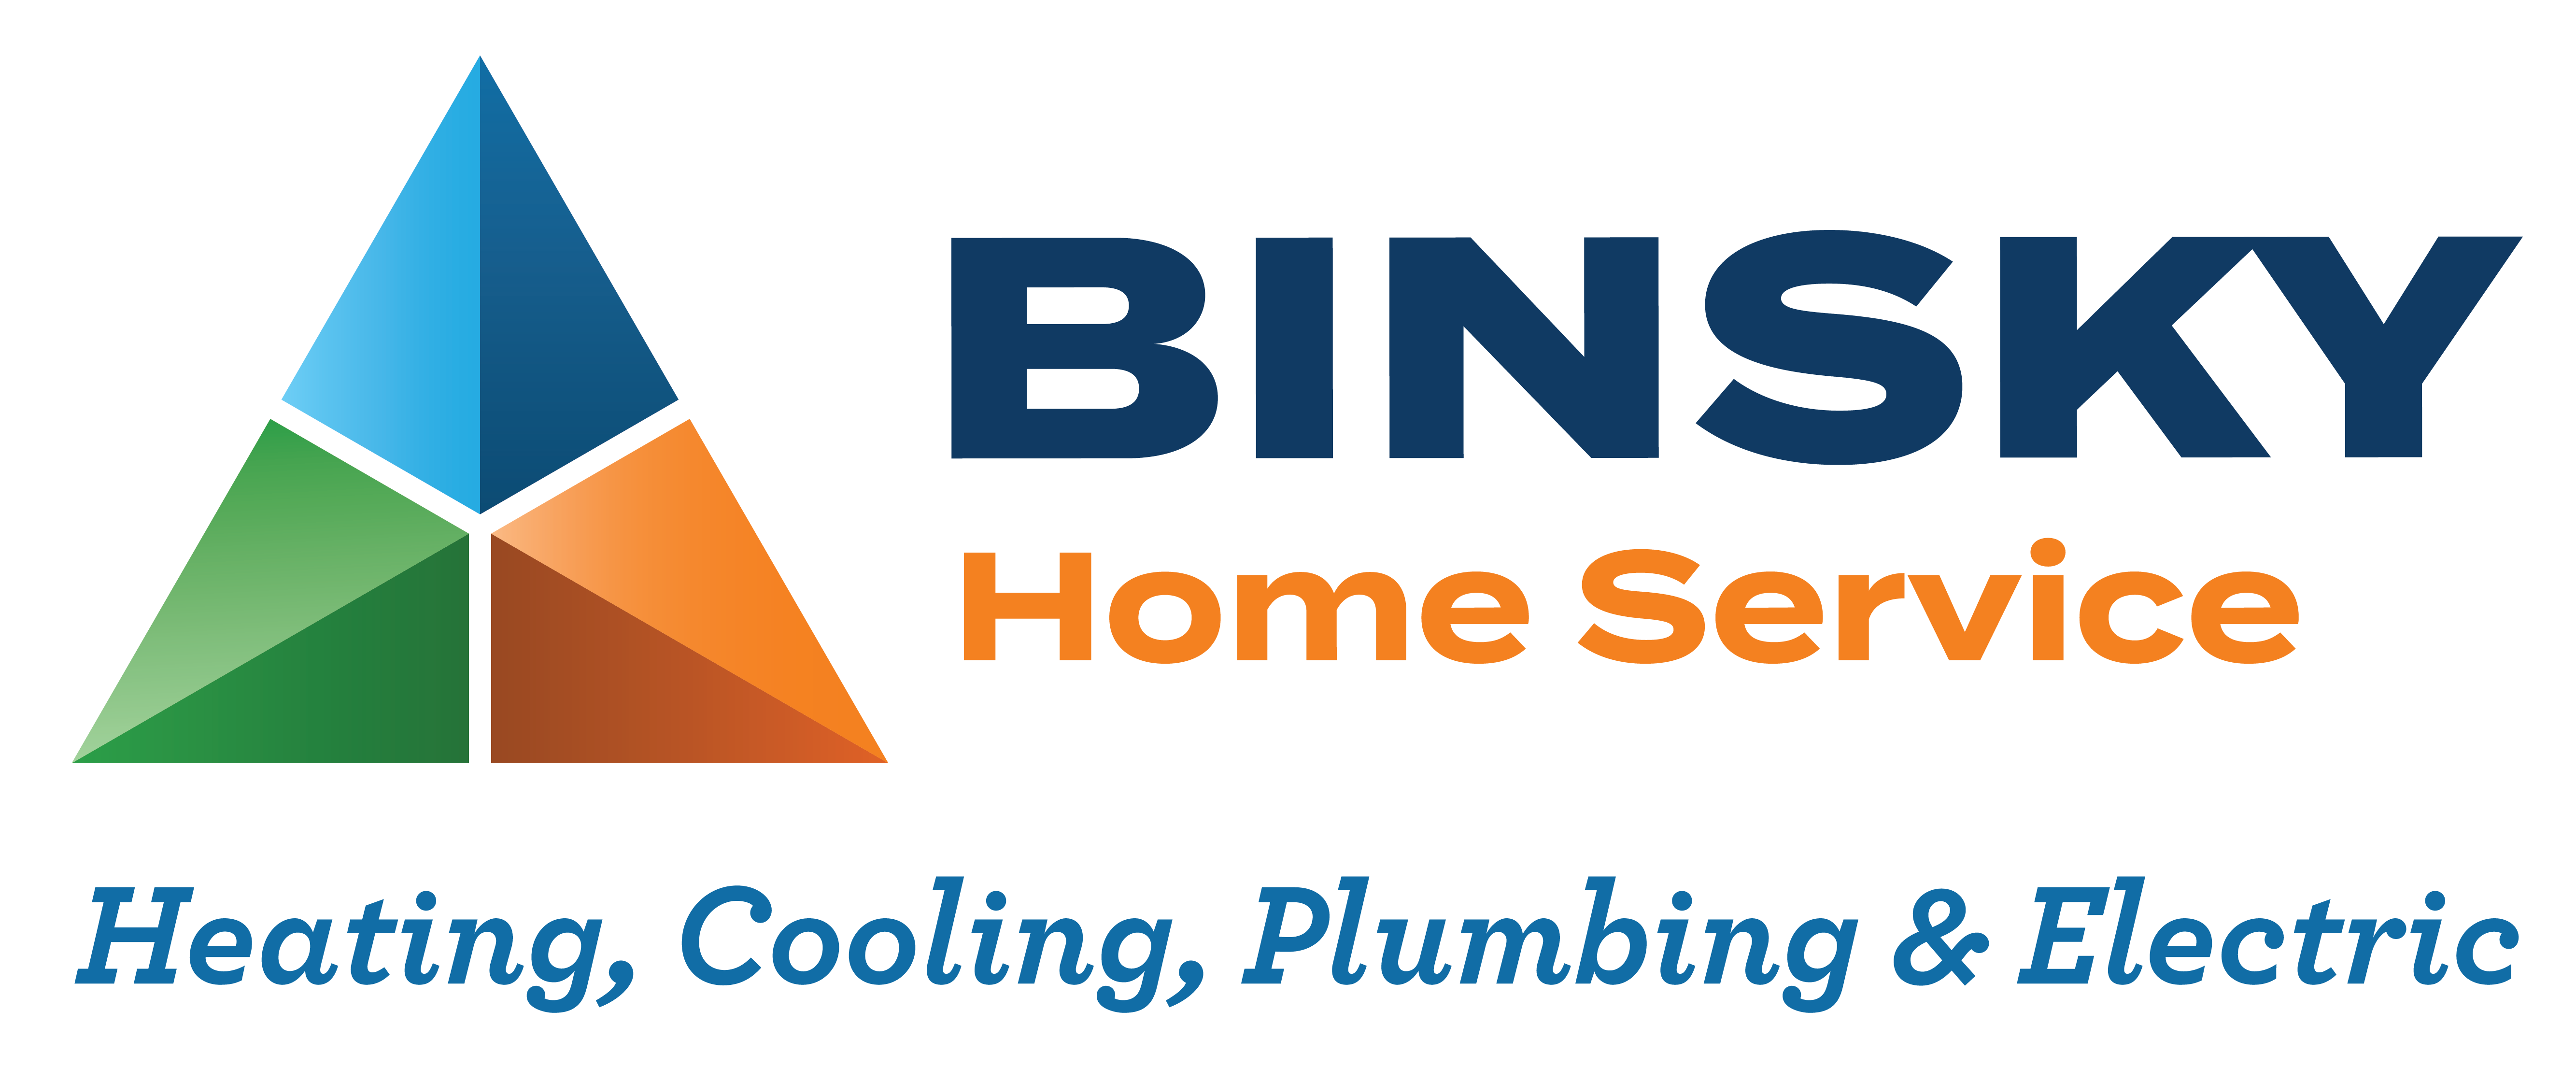 Binsky & Snyder, LLC Logo